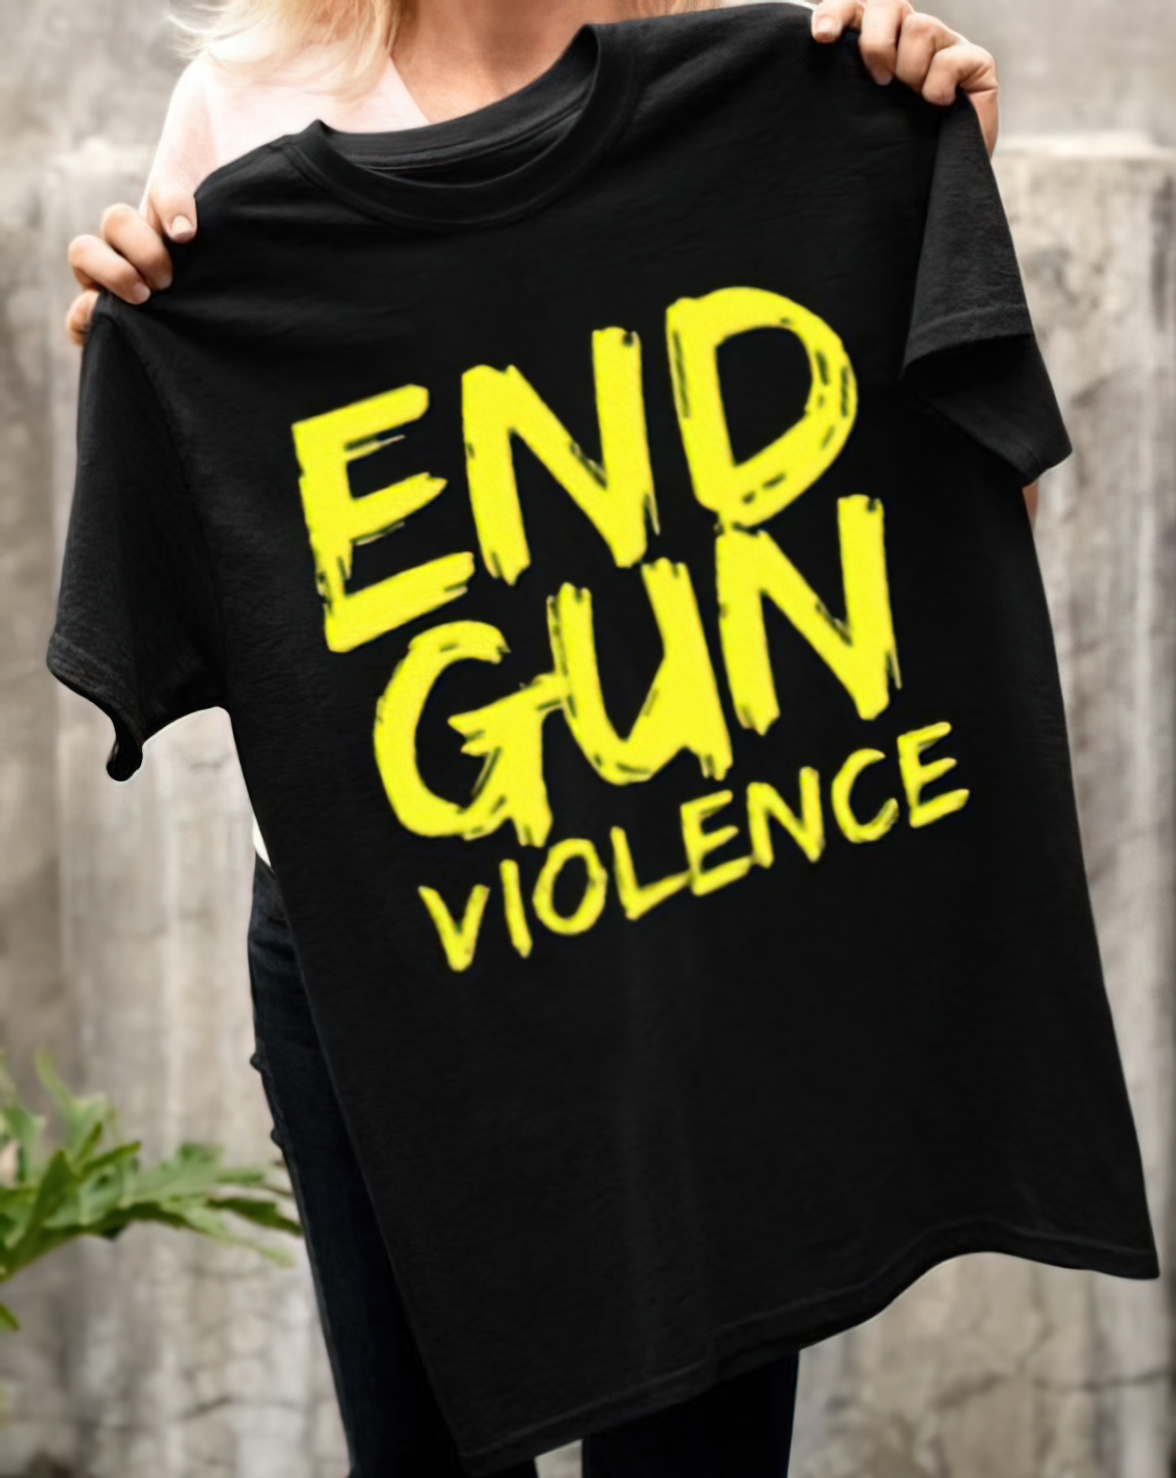 End gun violence shirt - Endastore.com